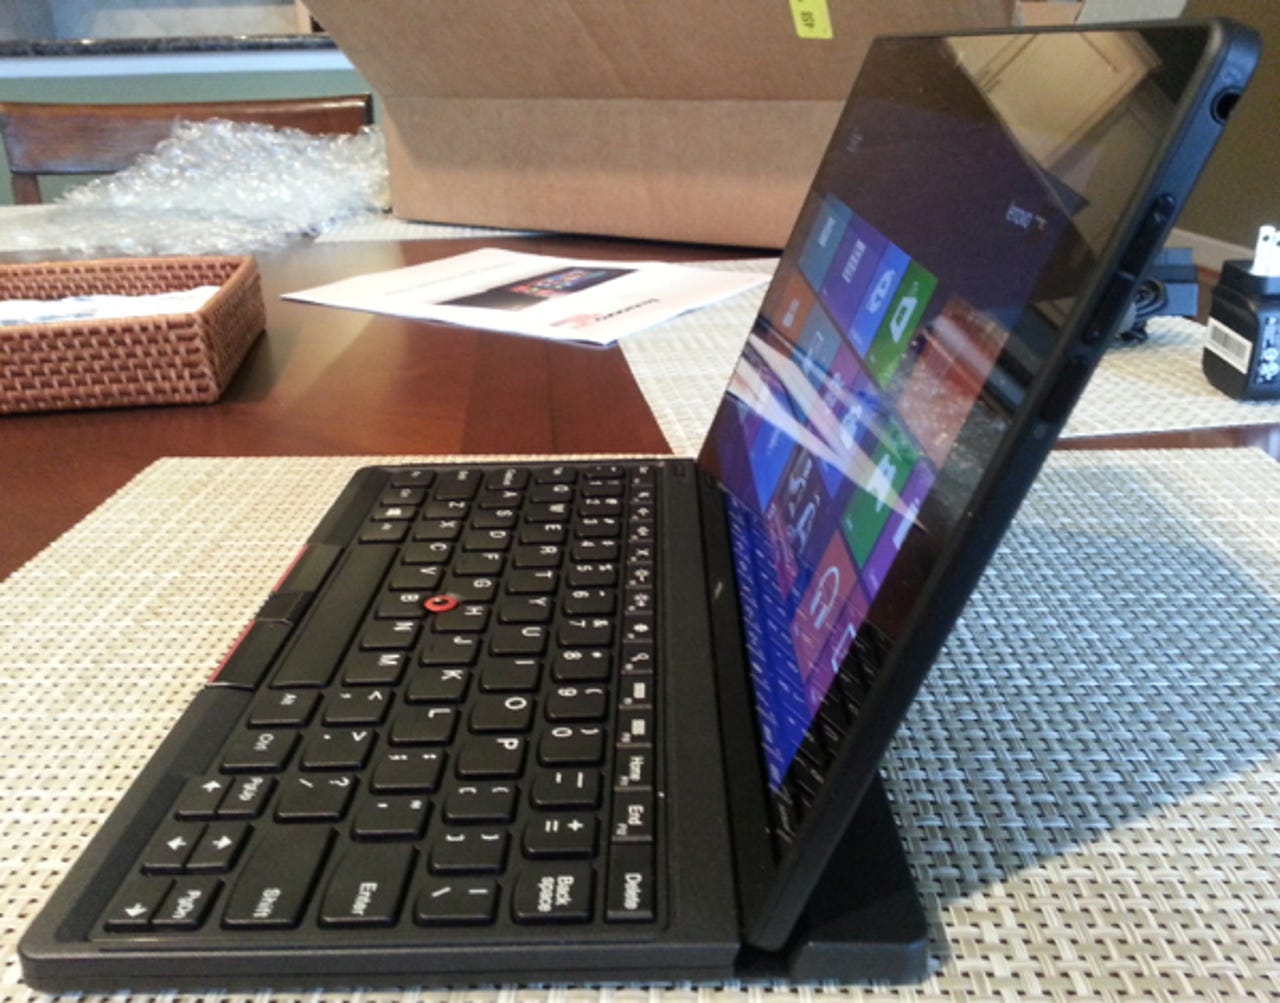 04-tablet-with-keyboard-side-600.jpg